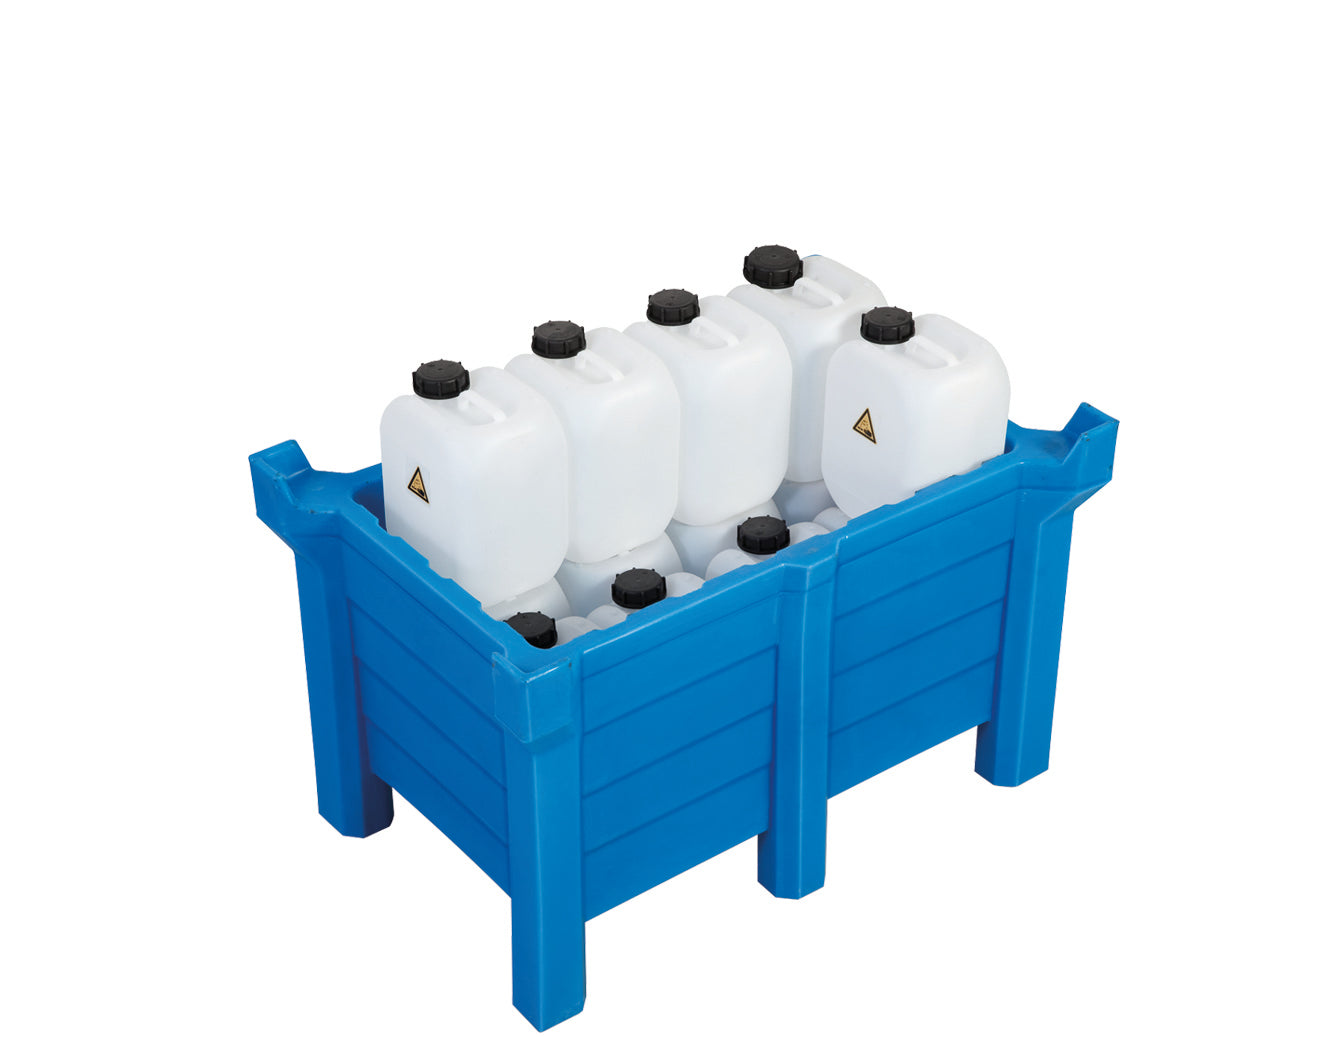 Récipients à empilement en polyéthylène bleu fermés, 90 litres, 500x500x800, polyéthylène